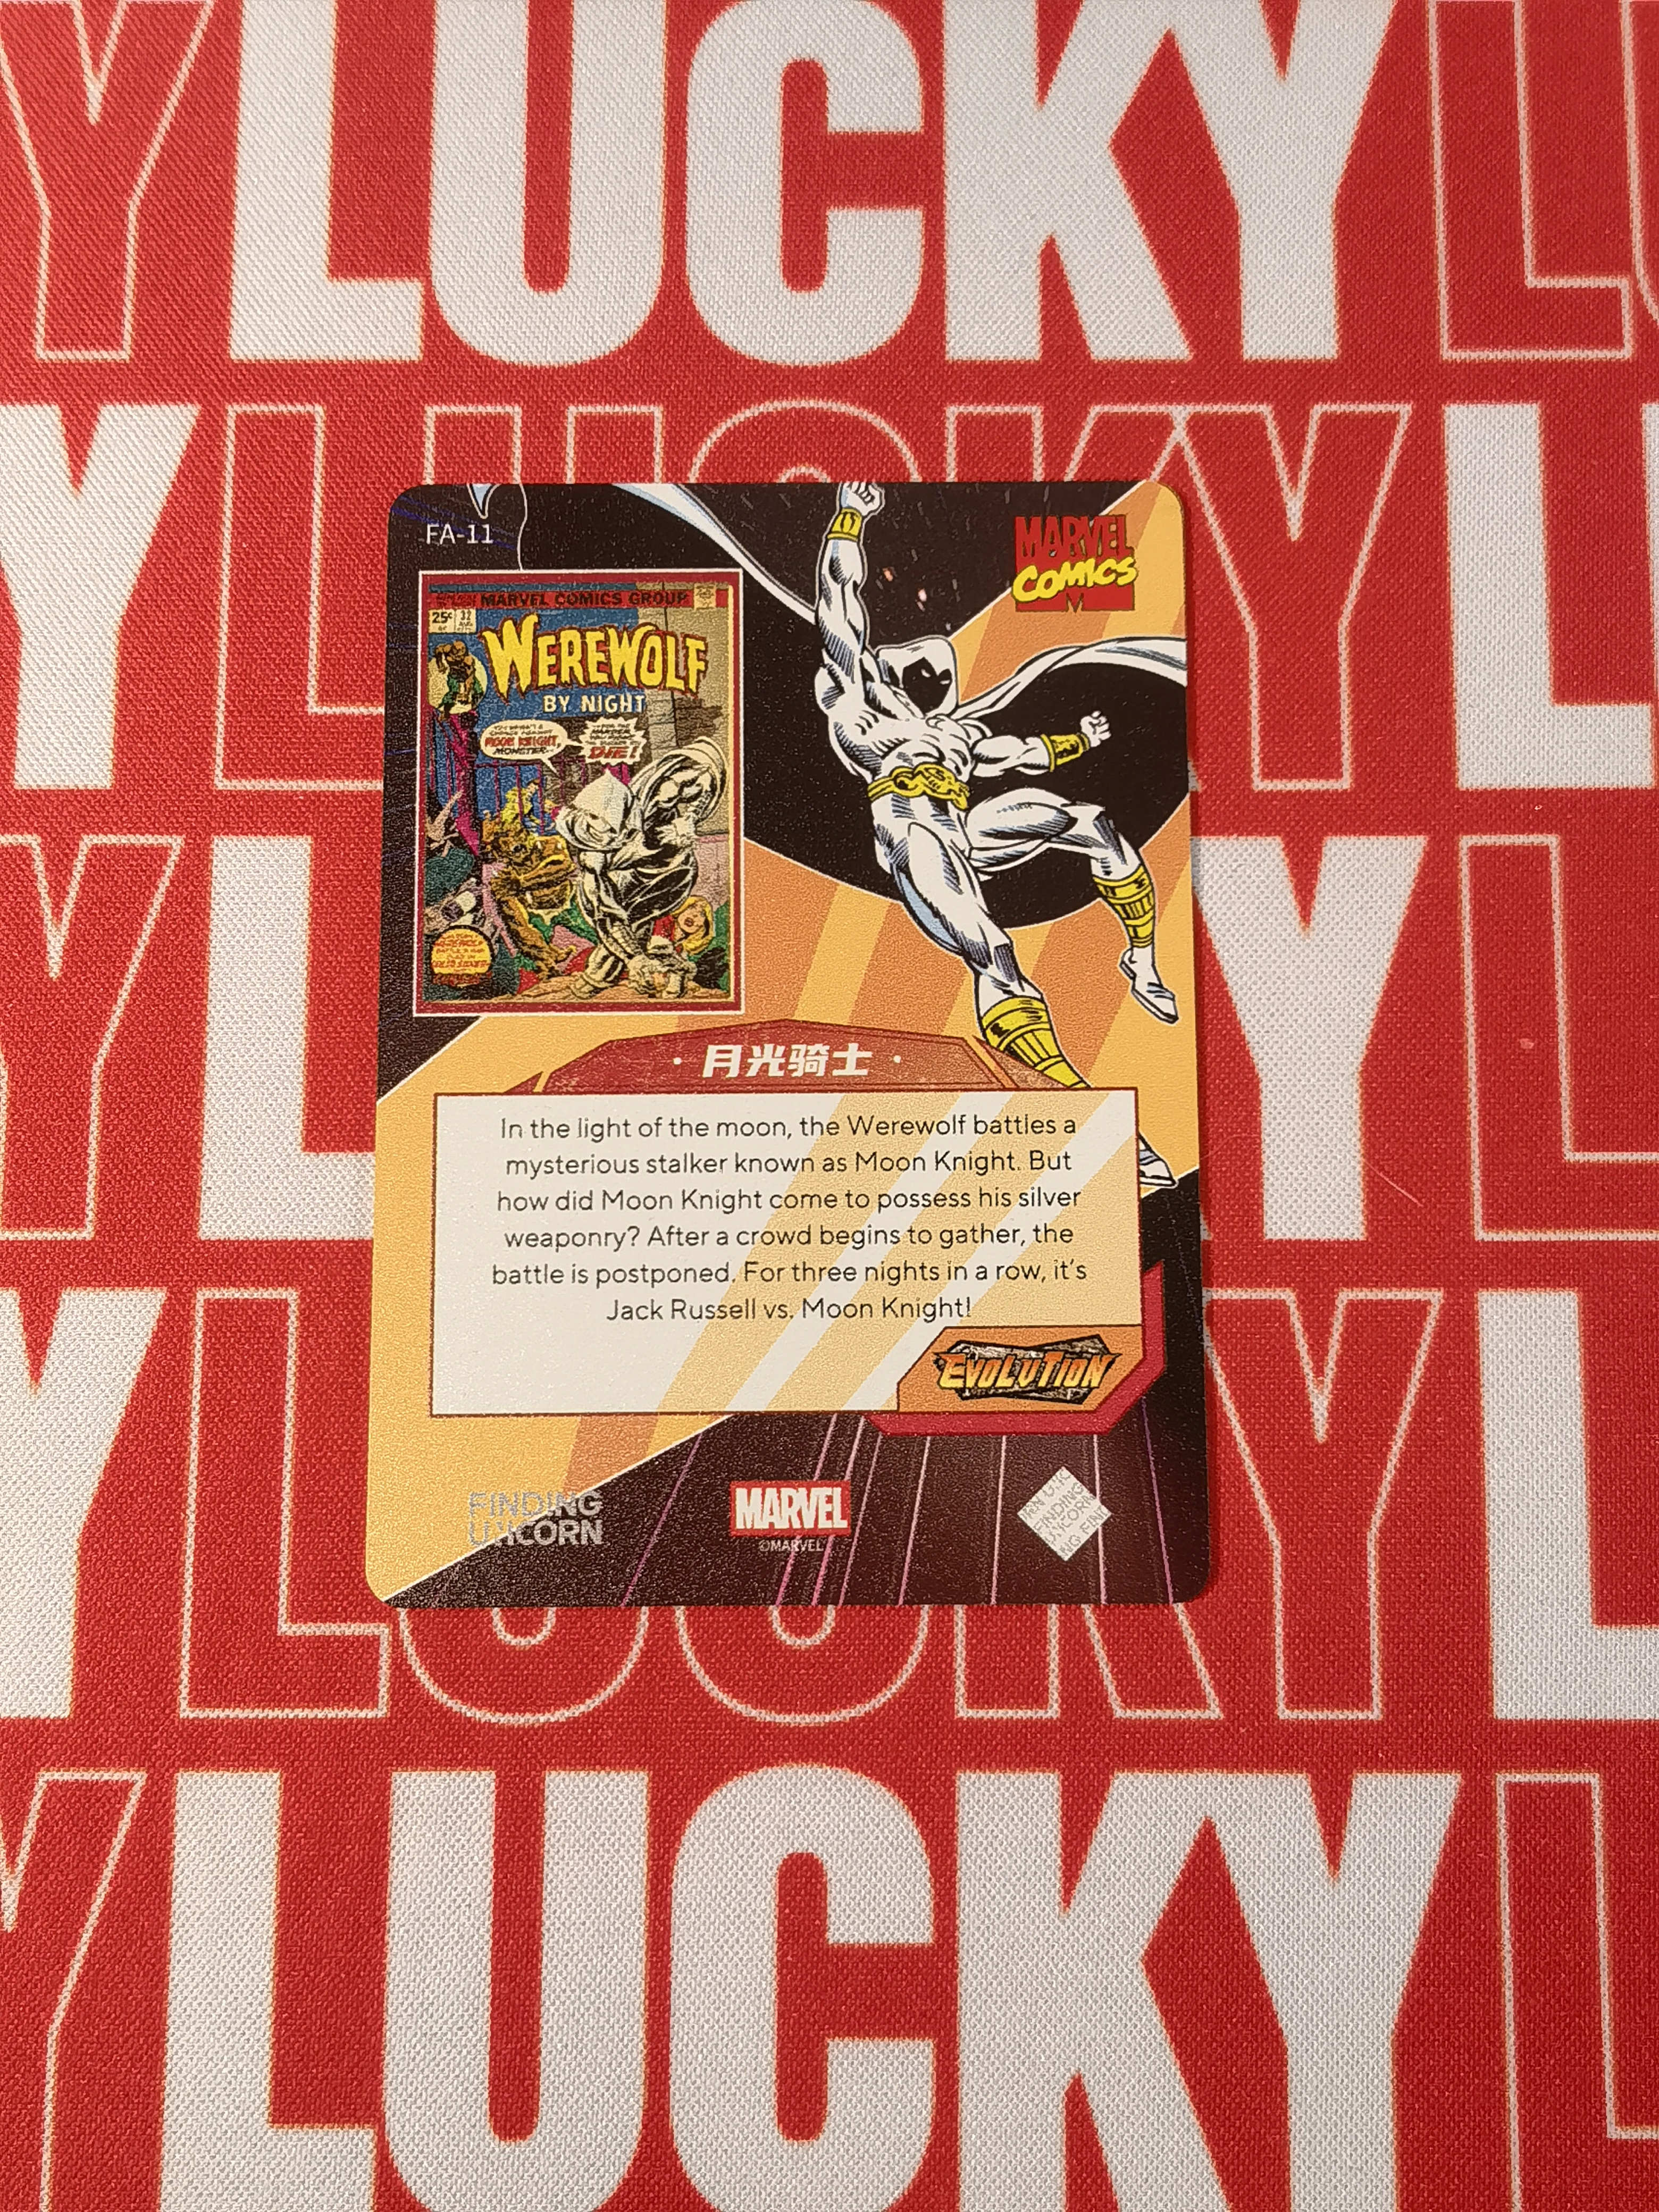 2024 FINDING CARD Marvel (MCU) Evolution 【Lucky7】寻卡 寻找独角兽 漫威漫画宇宙 演变系列 初登漫画封面 钢板 铁板 金属板 1:86大比例 月光骑士